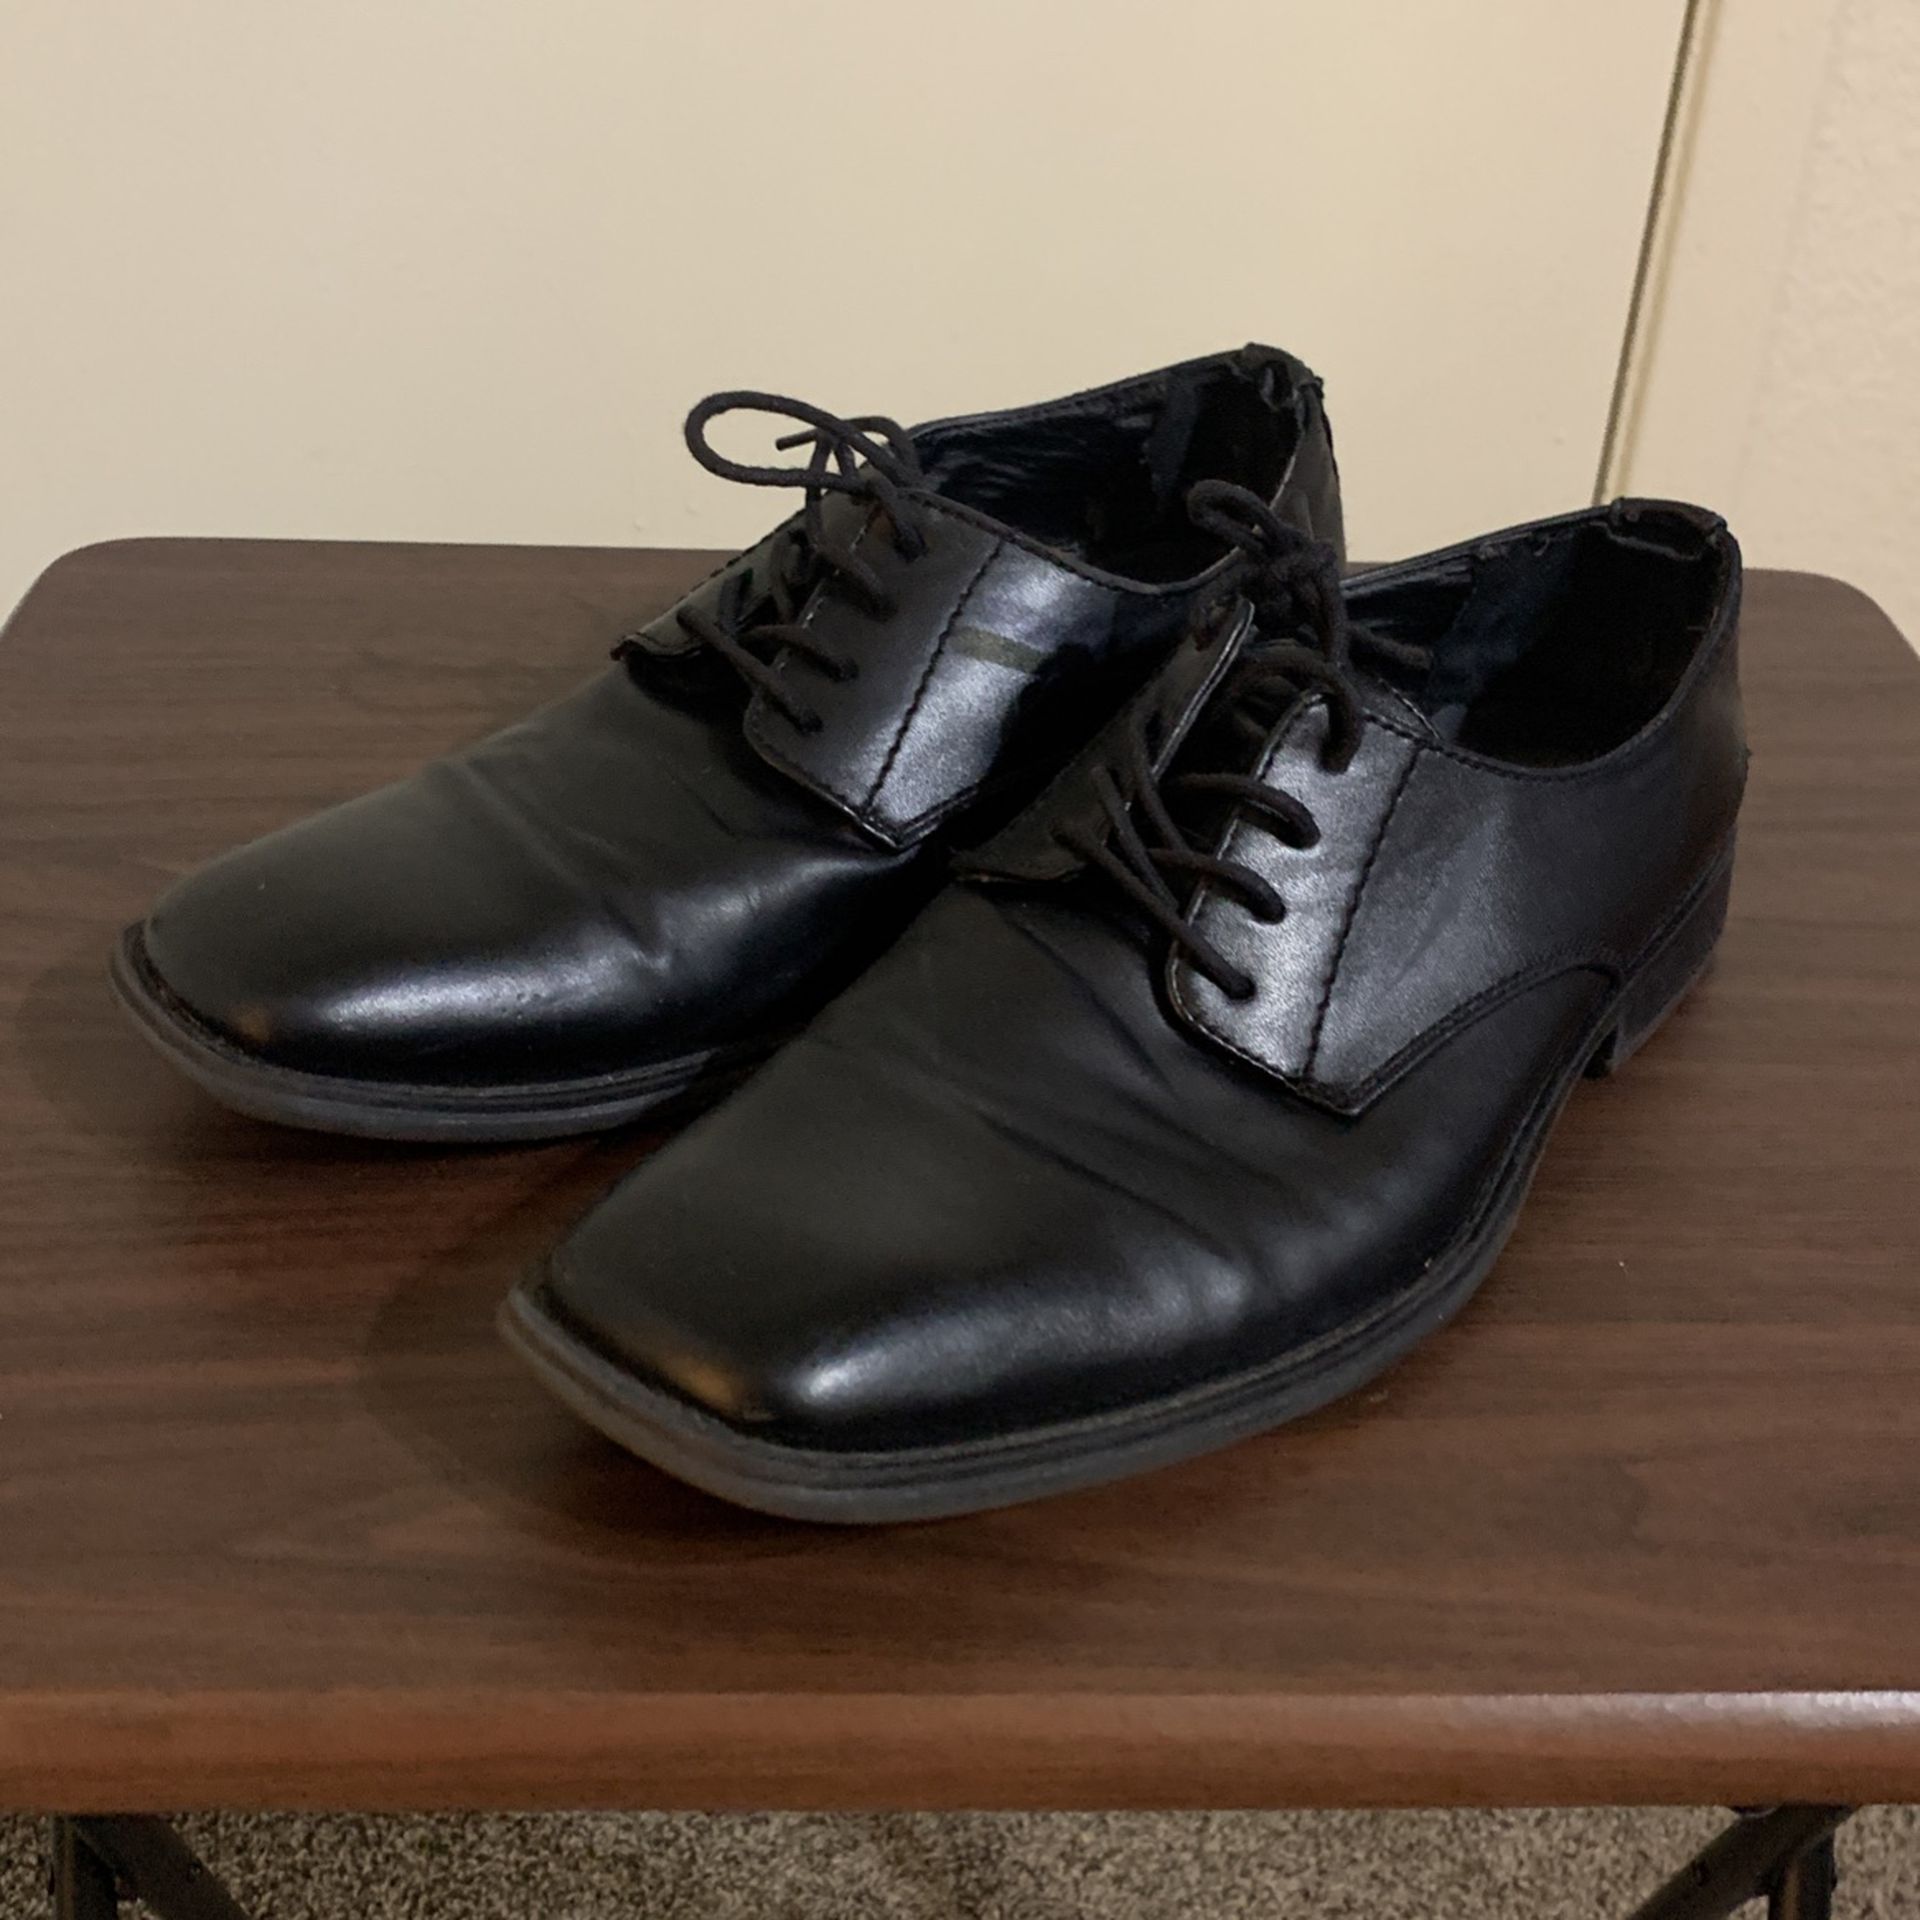 Alfani Black Leather Dress Shoes (Great Shape)